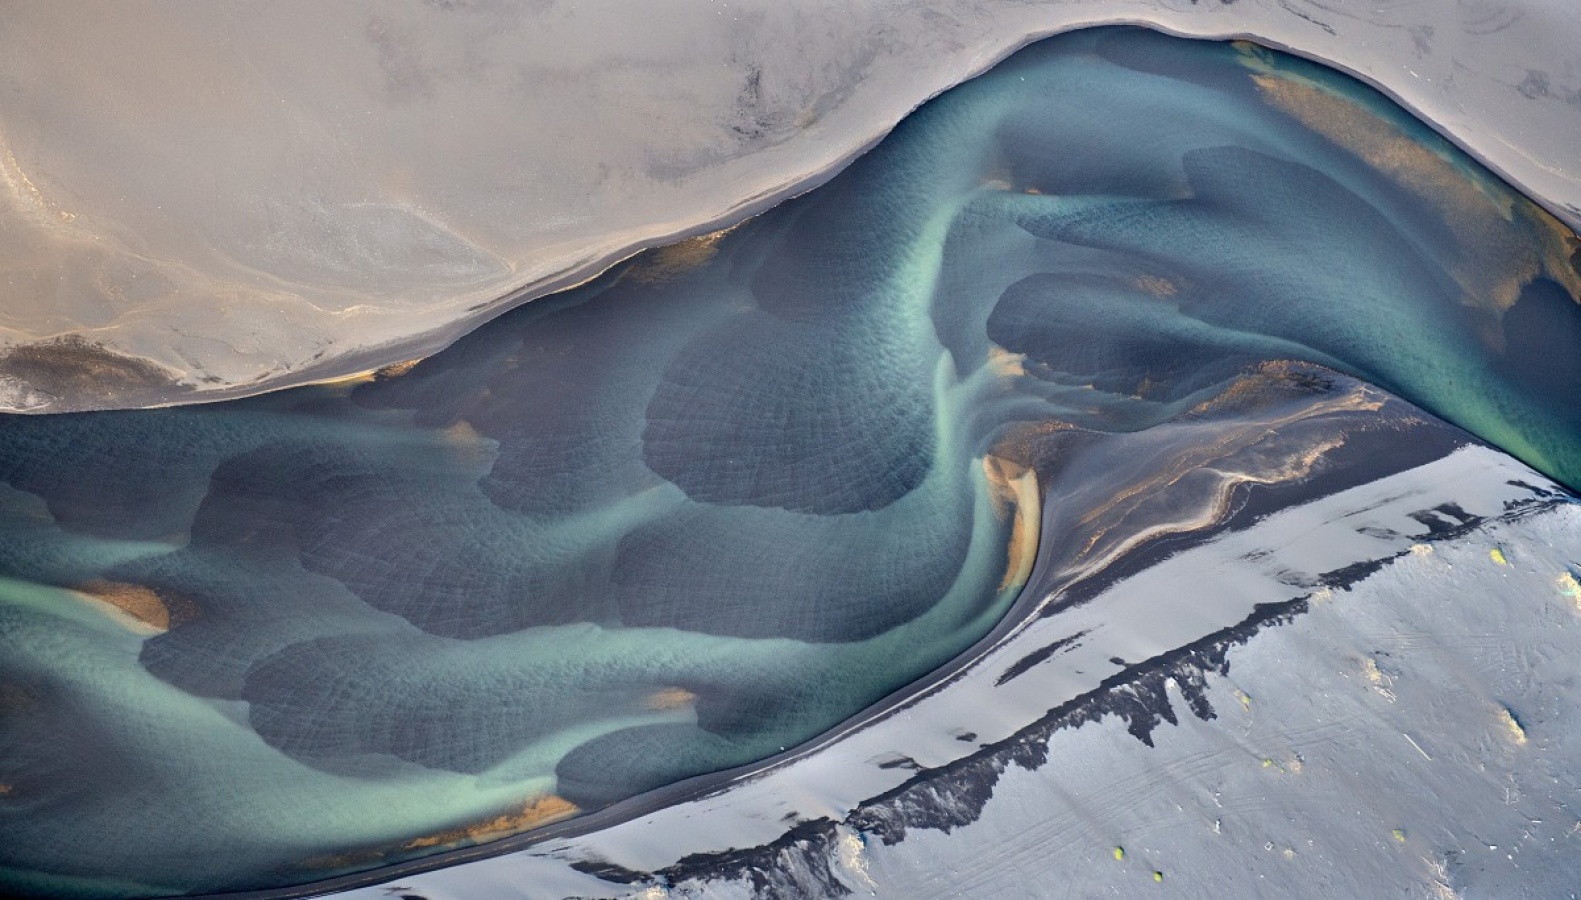 petals-volcanic-river-iceland-andre-ermolaev.jpg